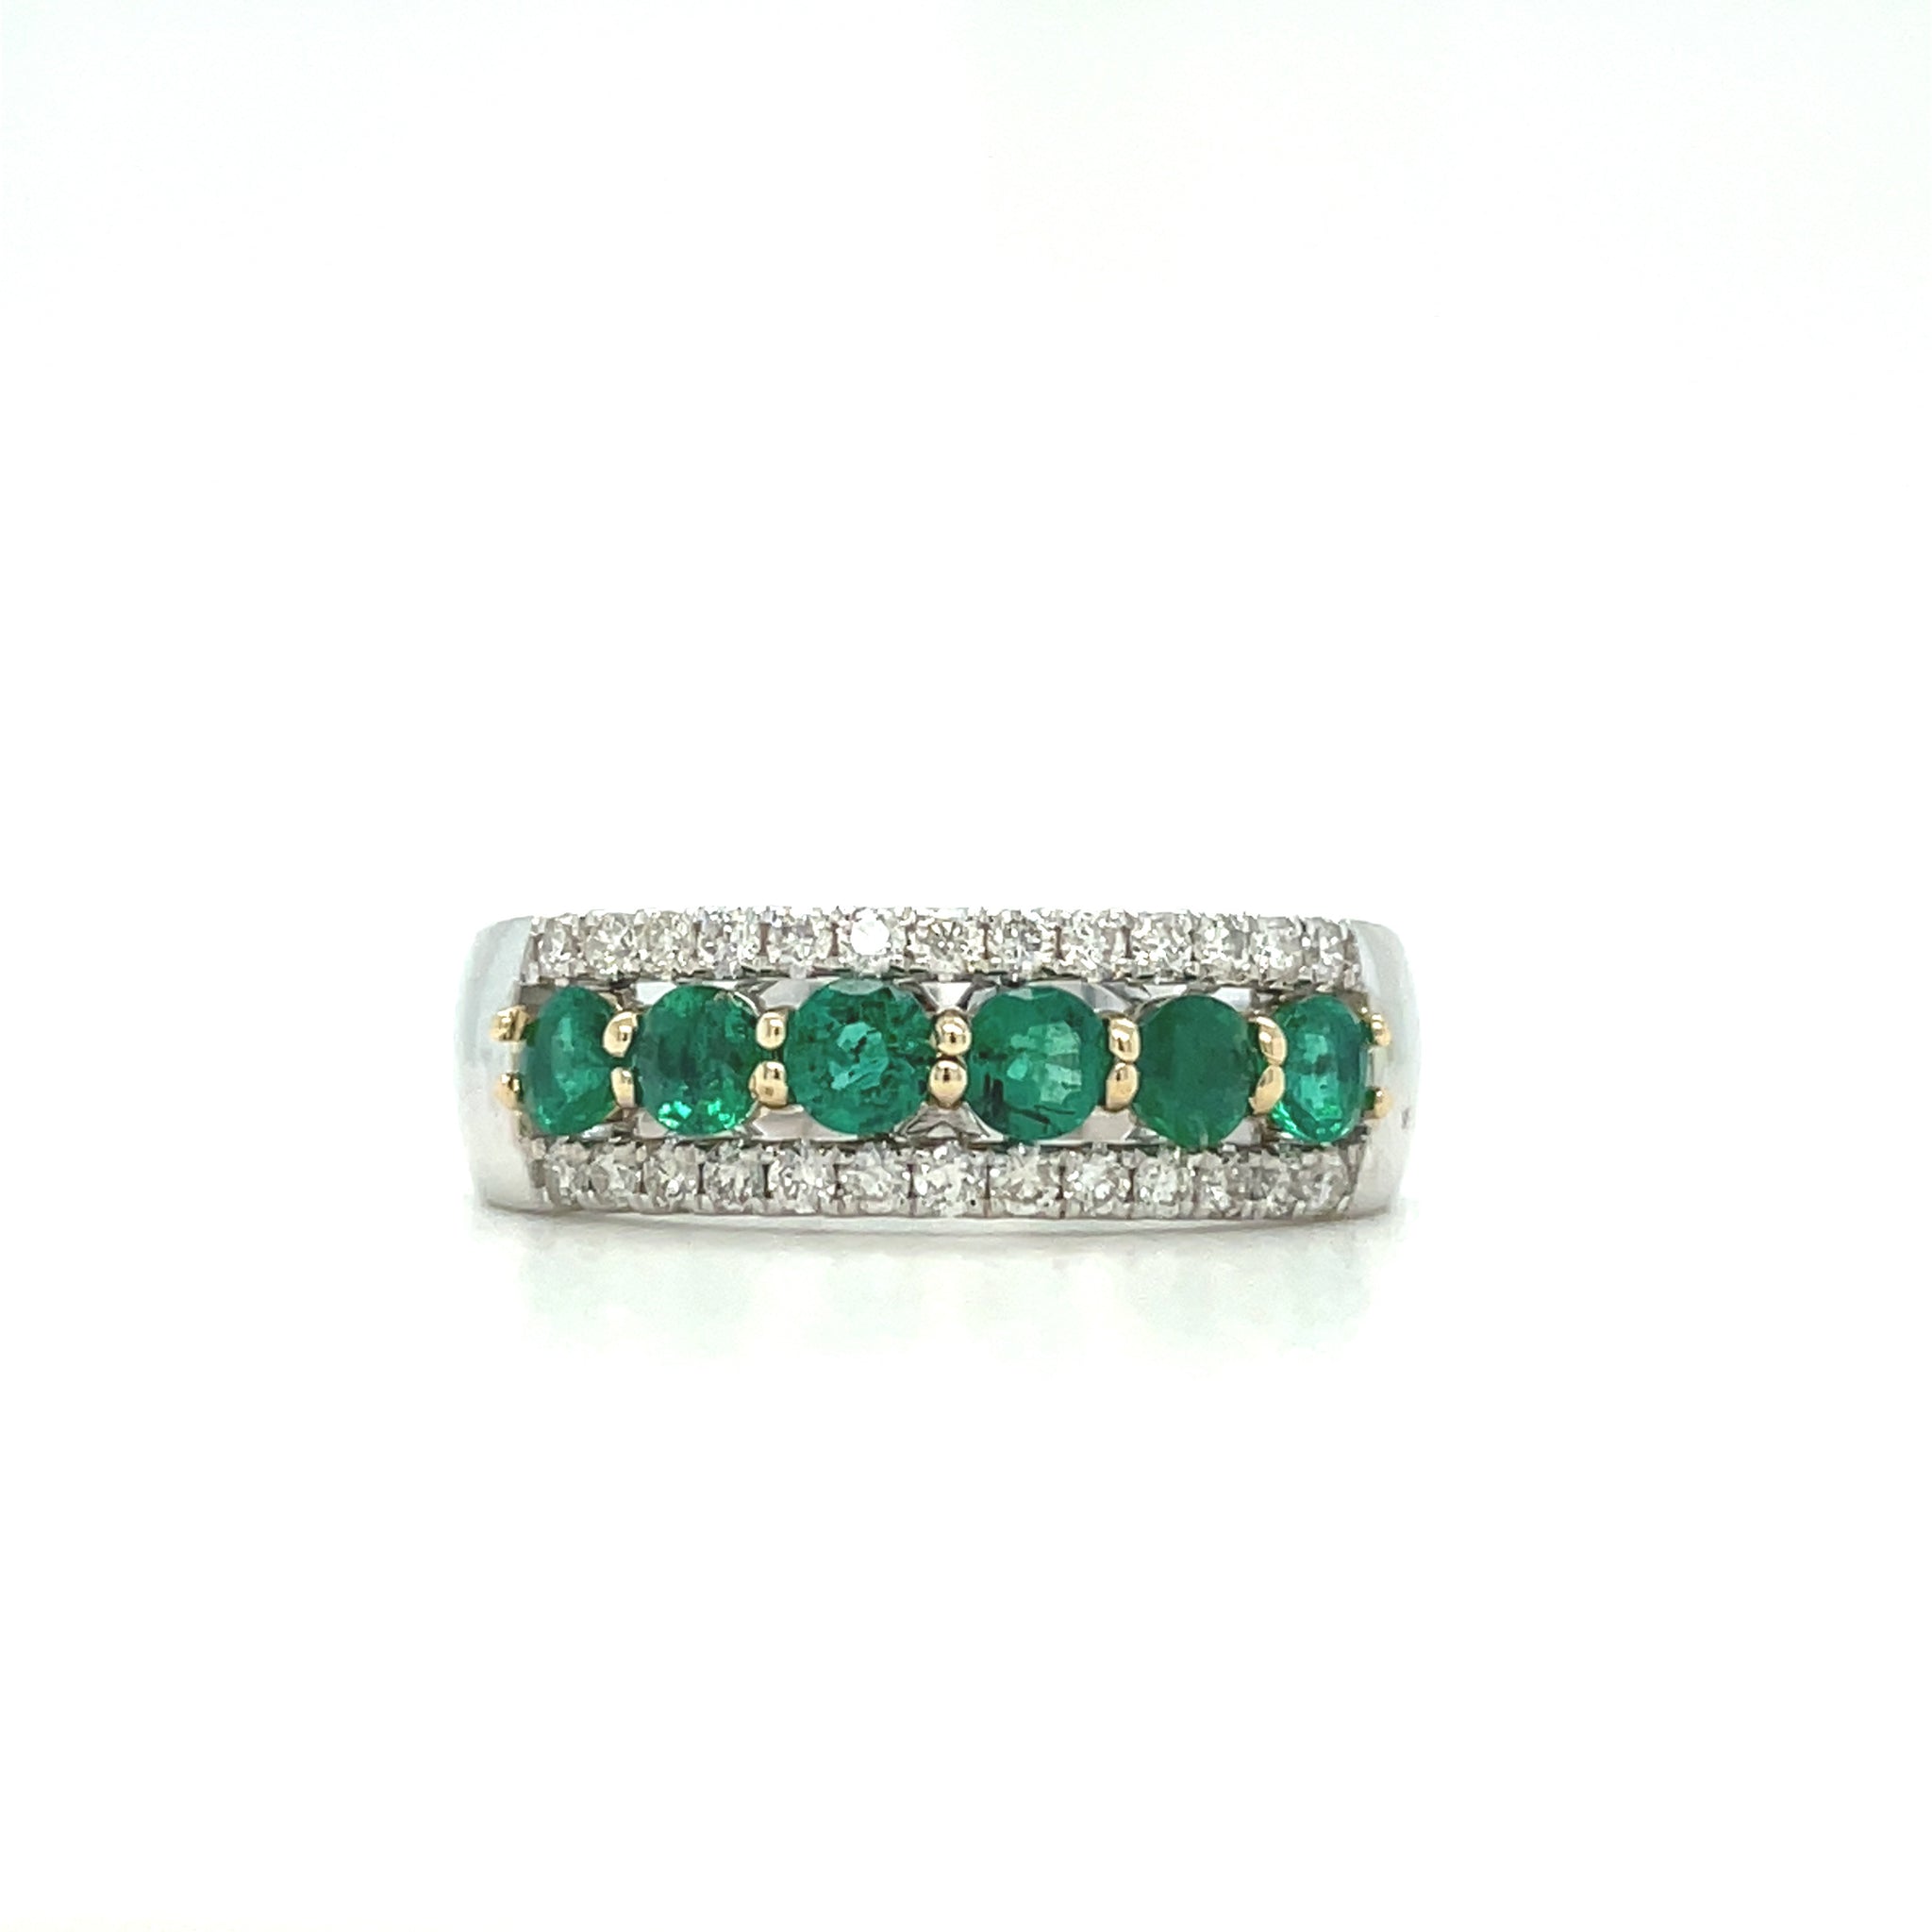 14K White Gold Fashion Ring with Round Emeralds and Round Diamonds